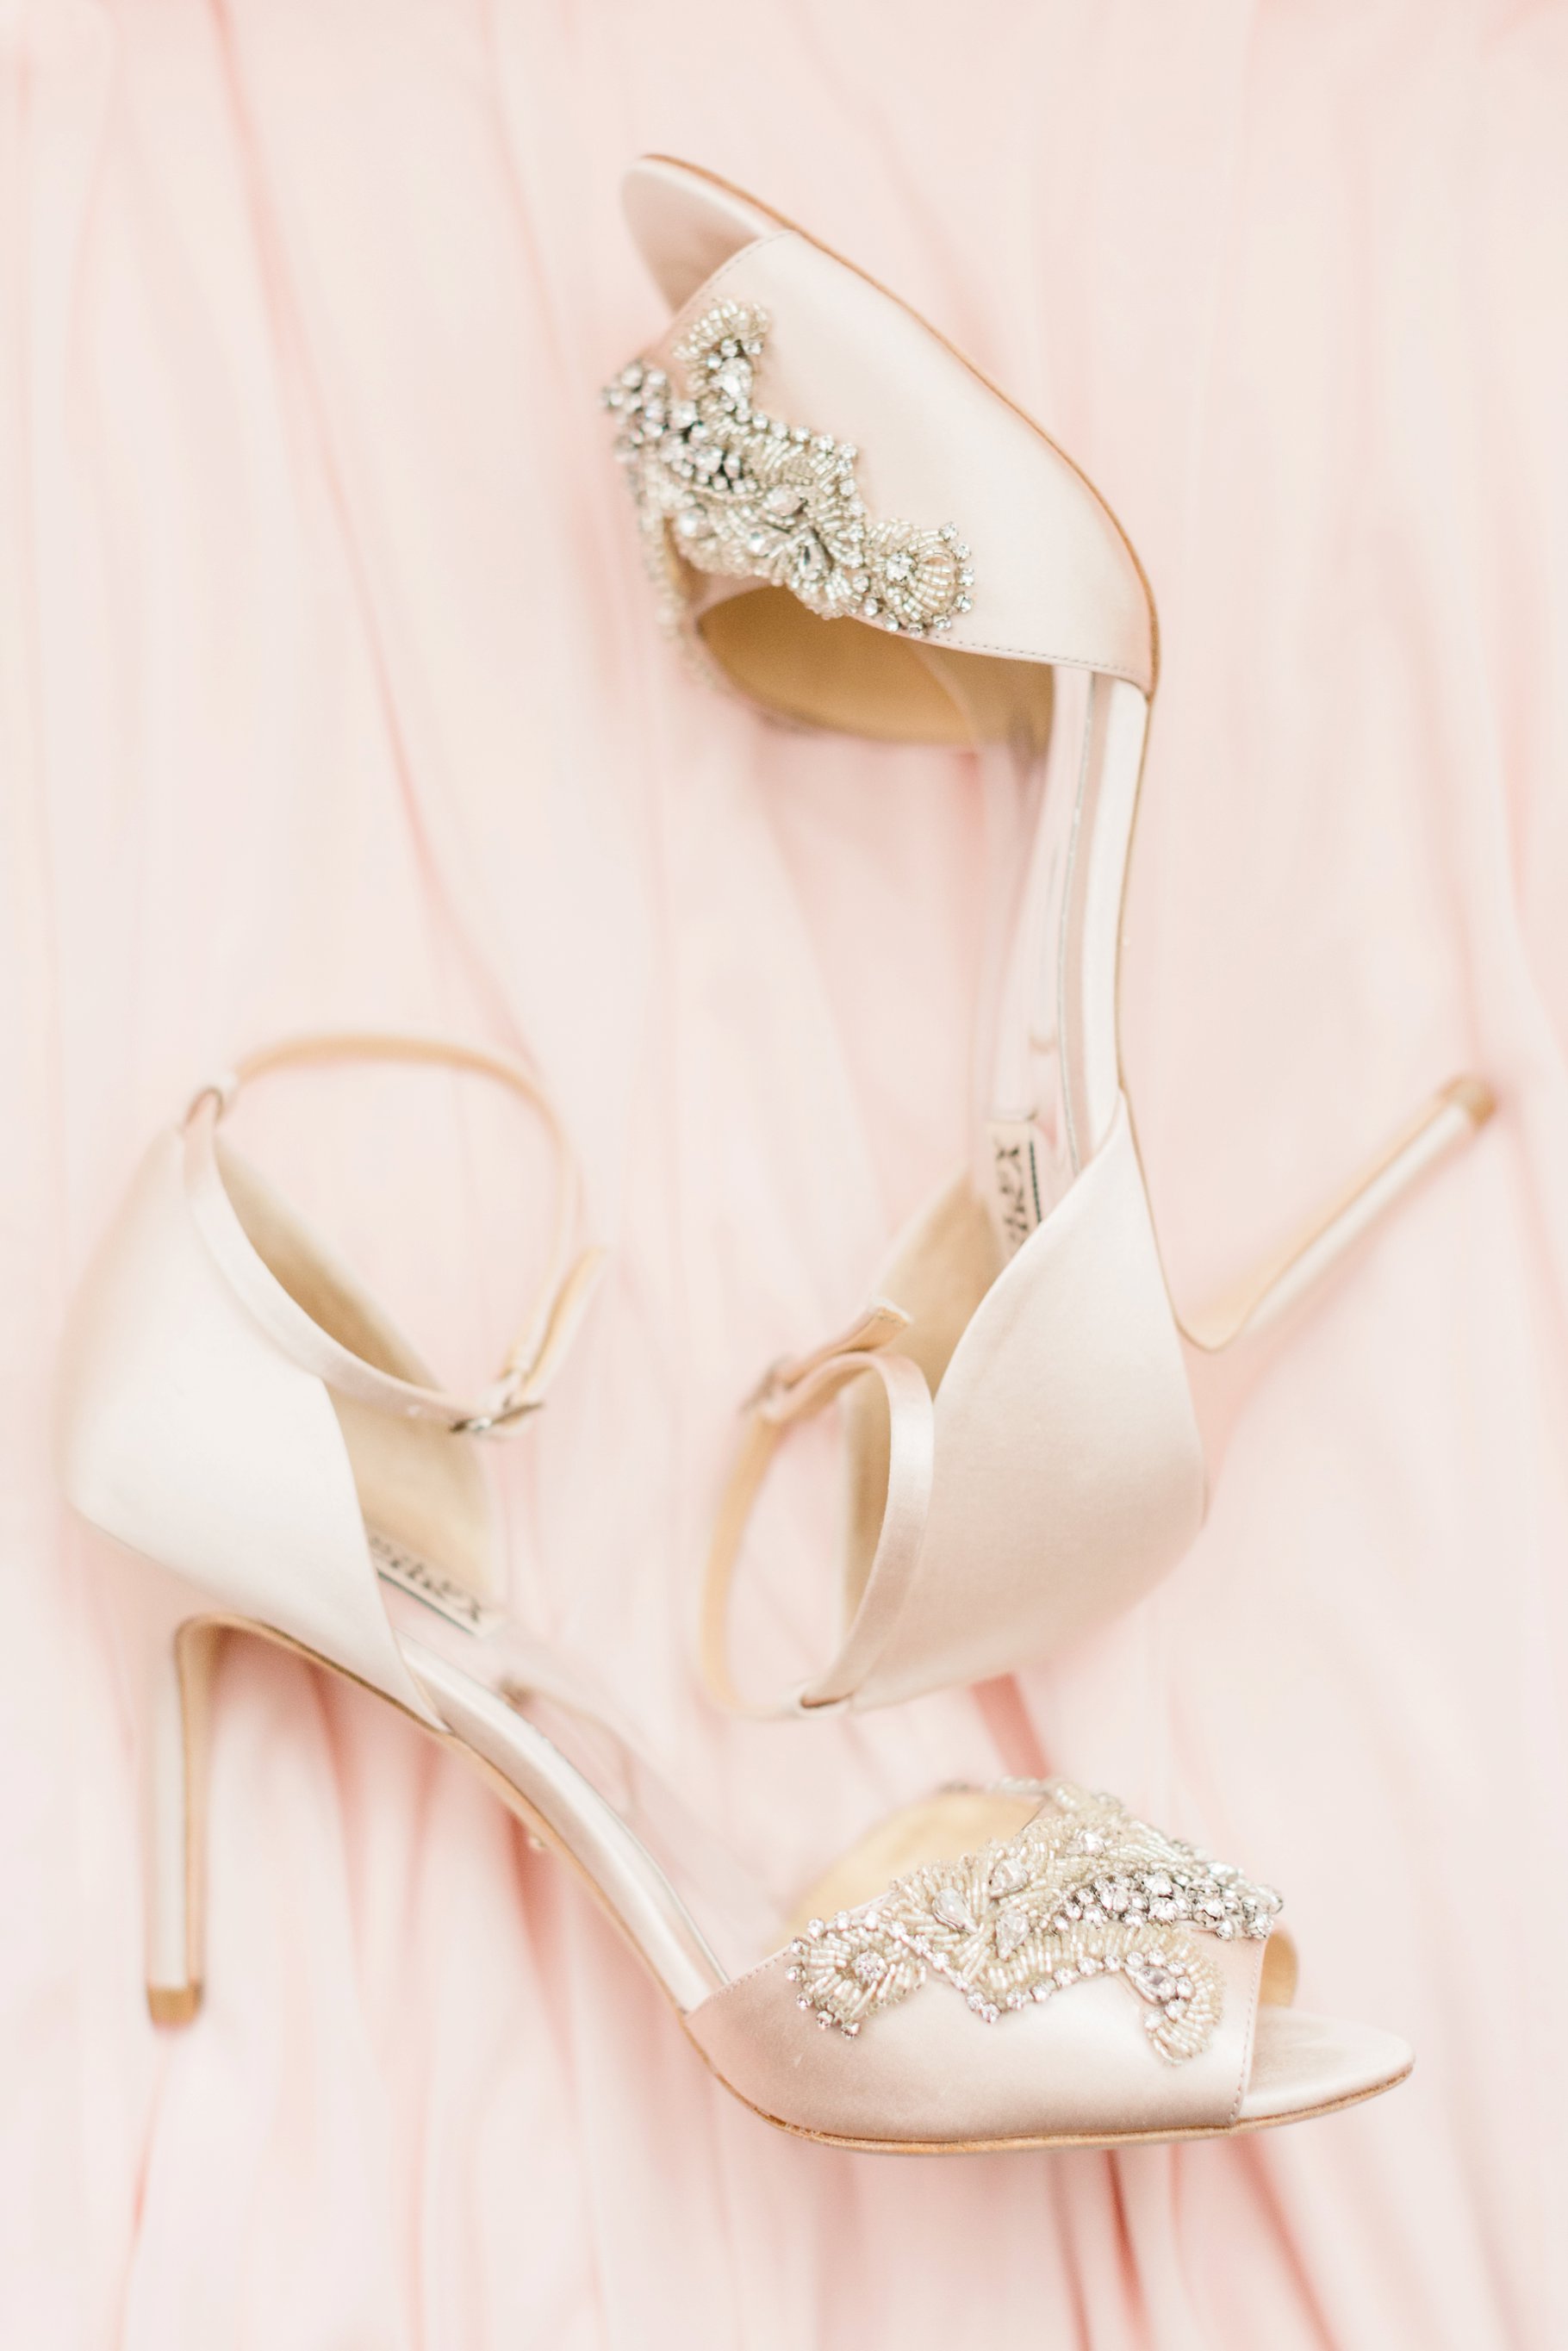 Blush Pink Badgley Mischka wedding shoes